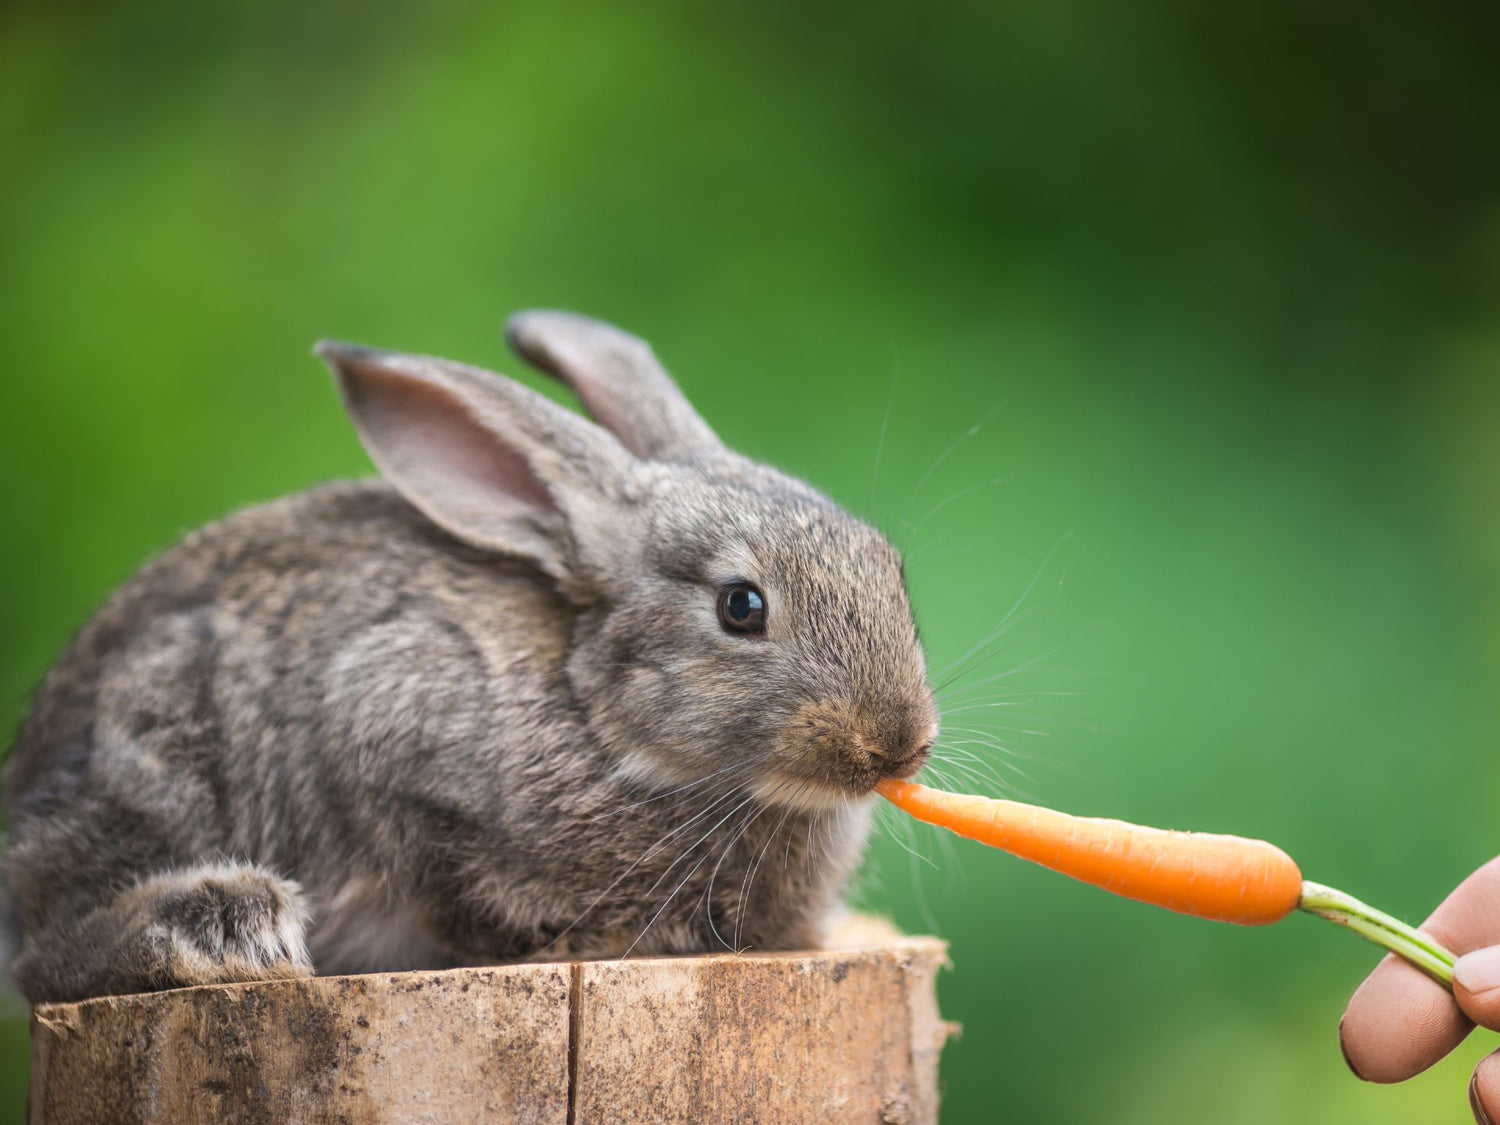 Rabbit eating a carrot.